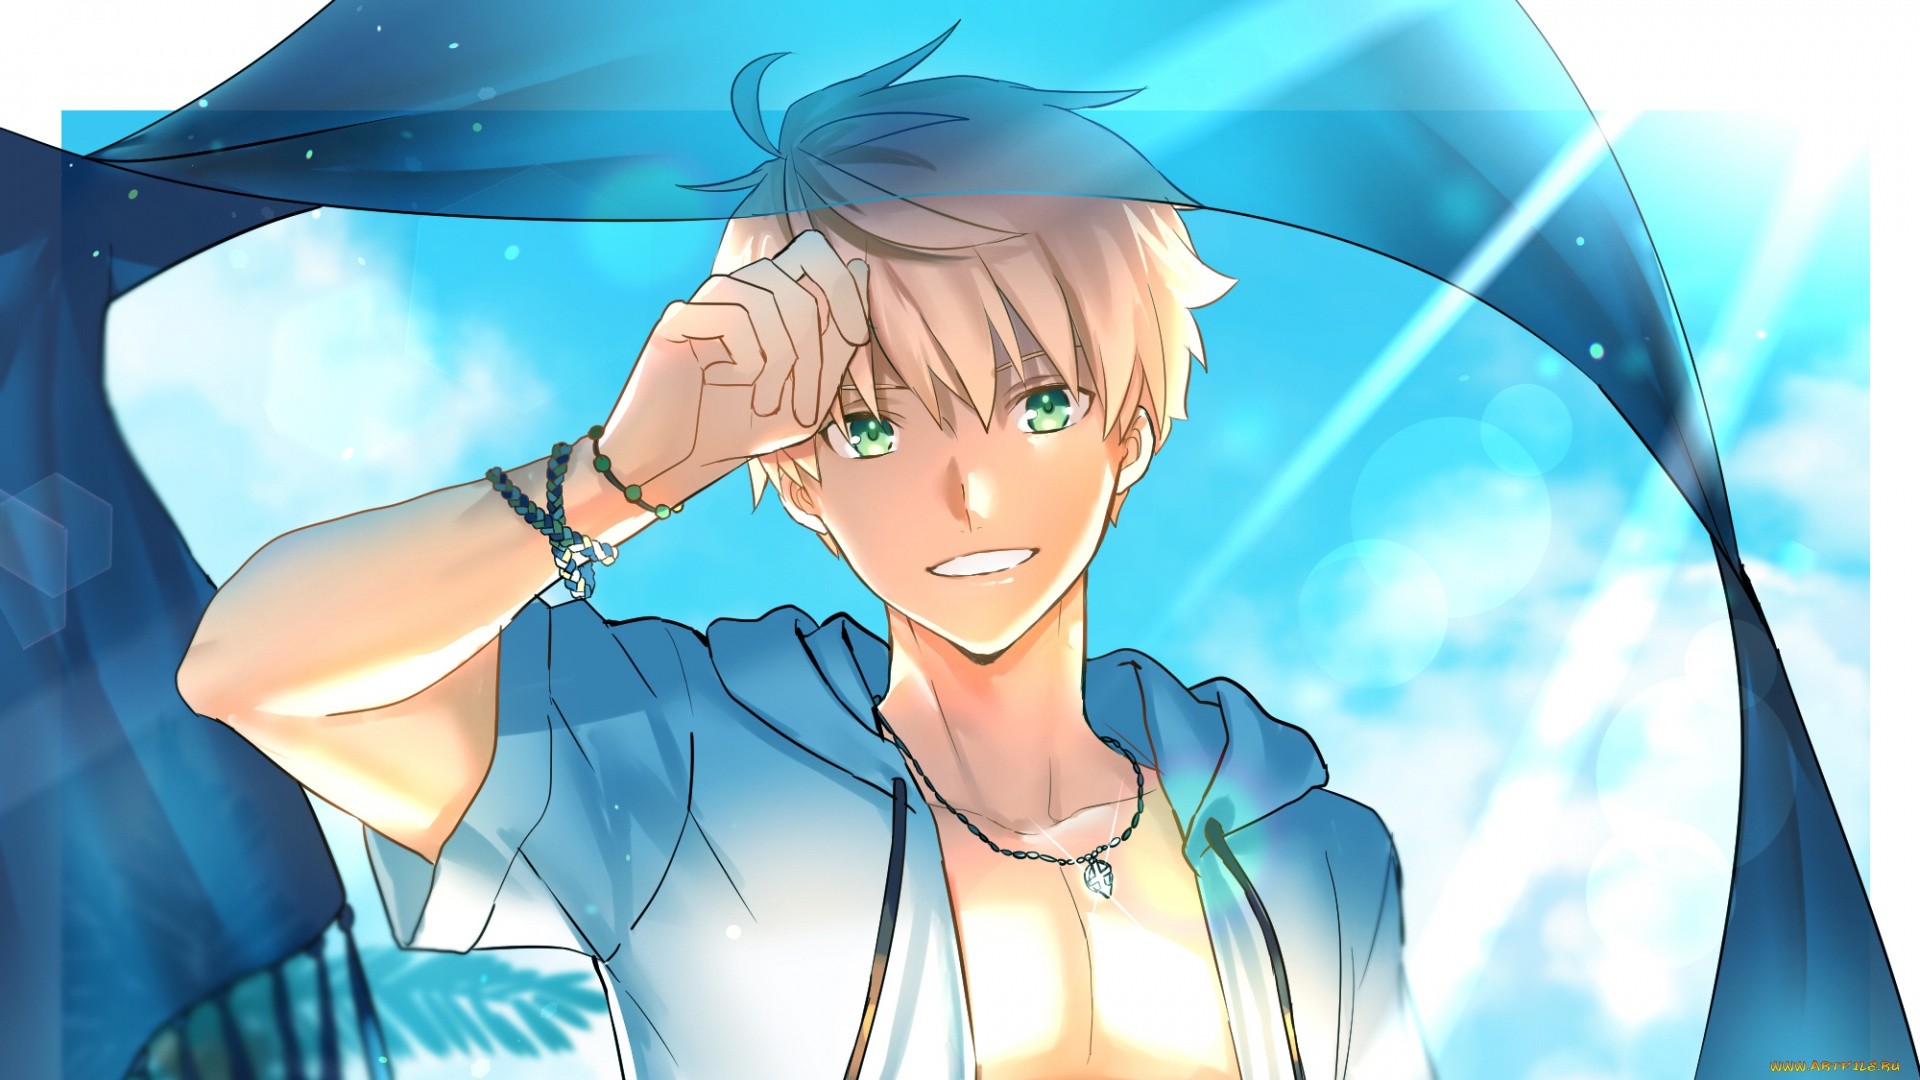 AI Handsome Anime Guy by Hinata5enpa1 on DeviantArt